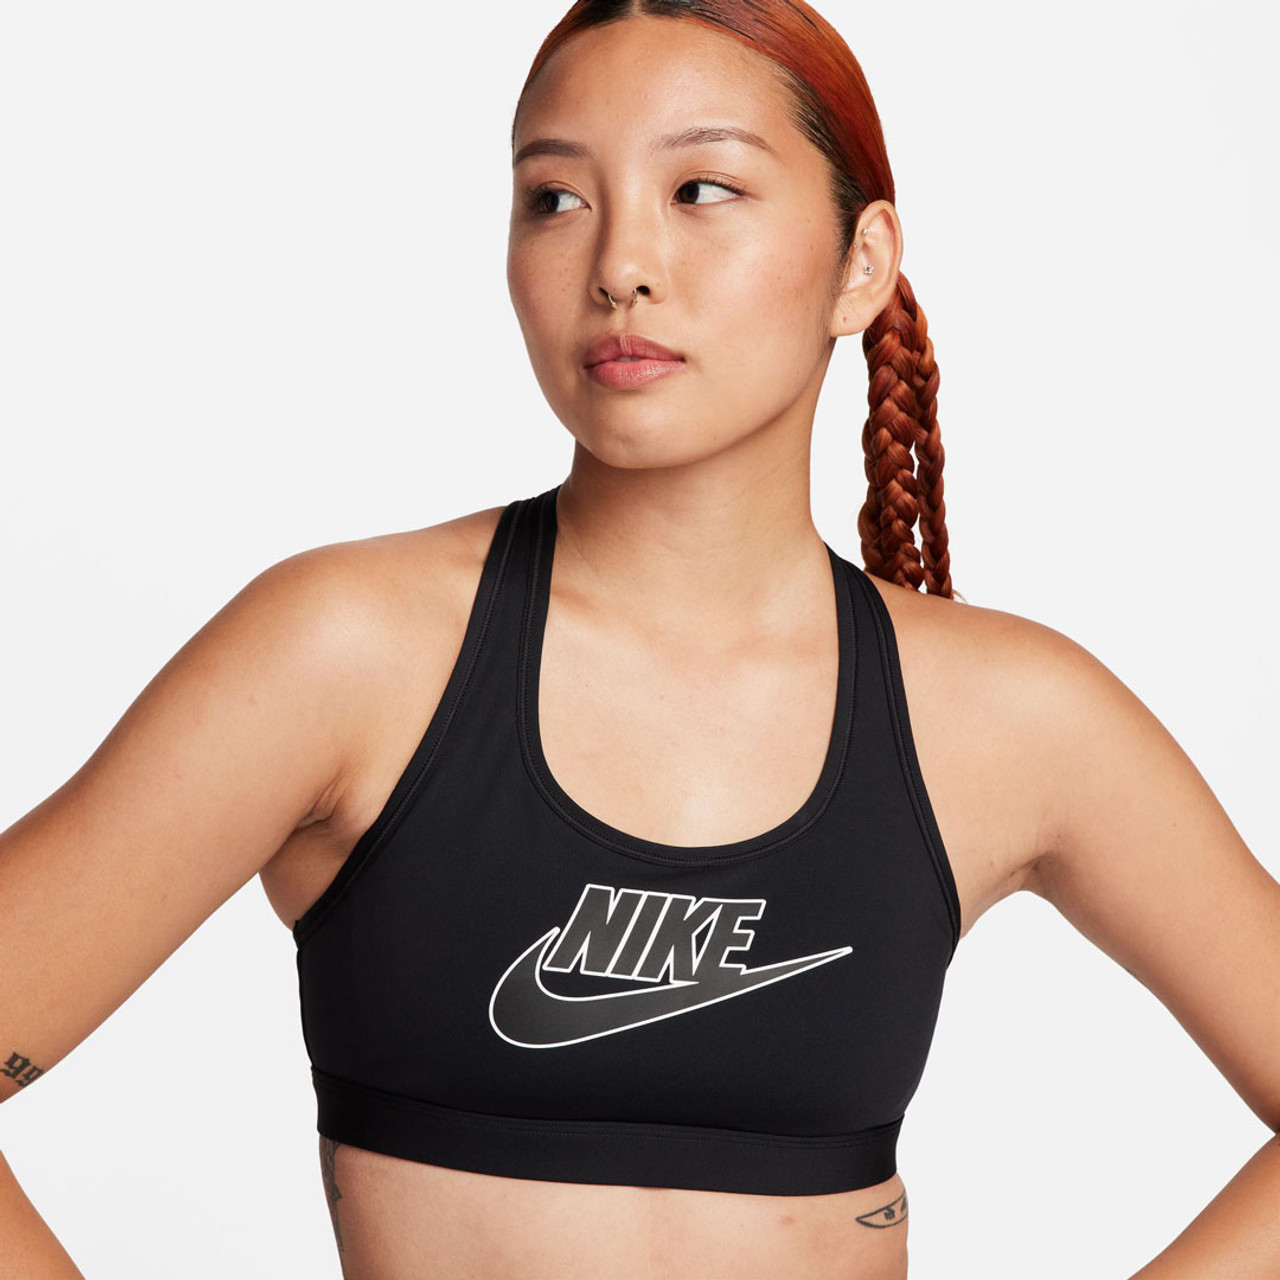 Nike Training Swoosh dri fit light-support padded sports bra in grey